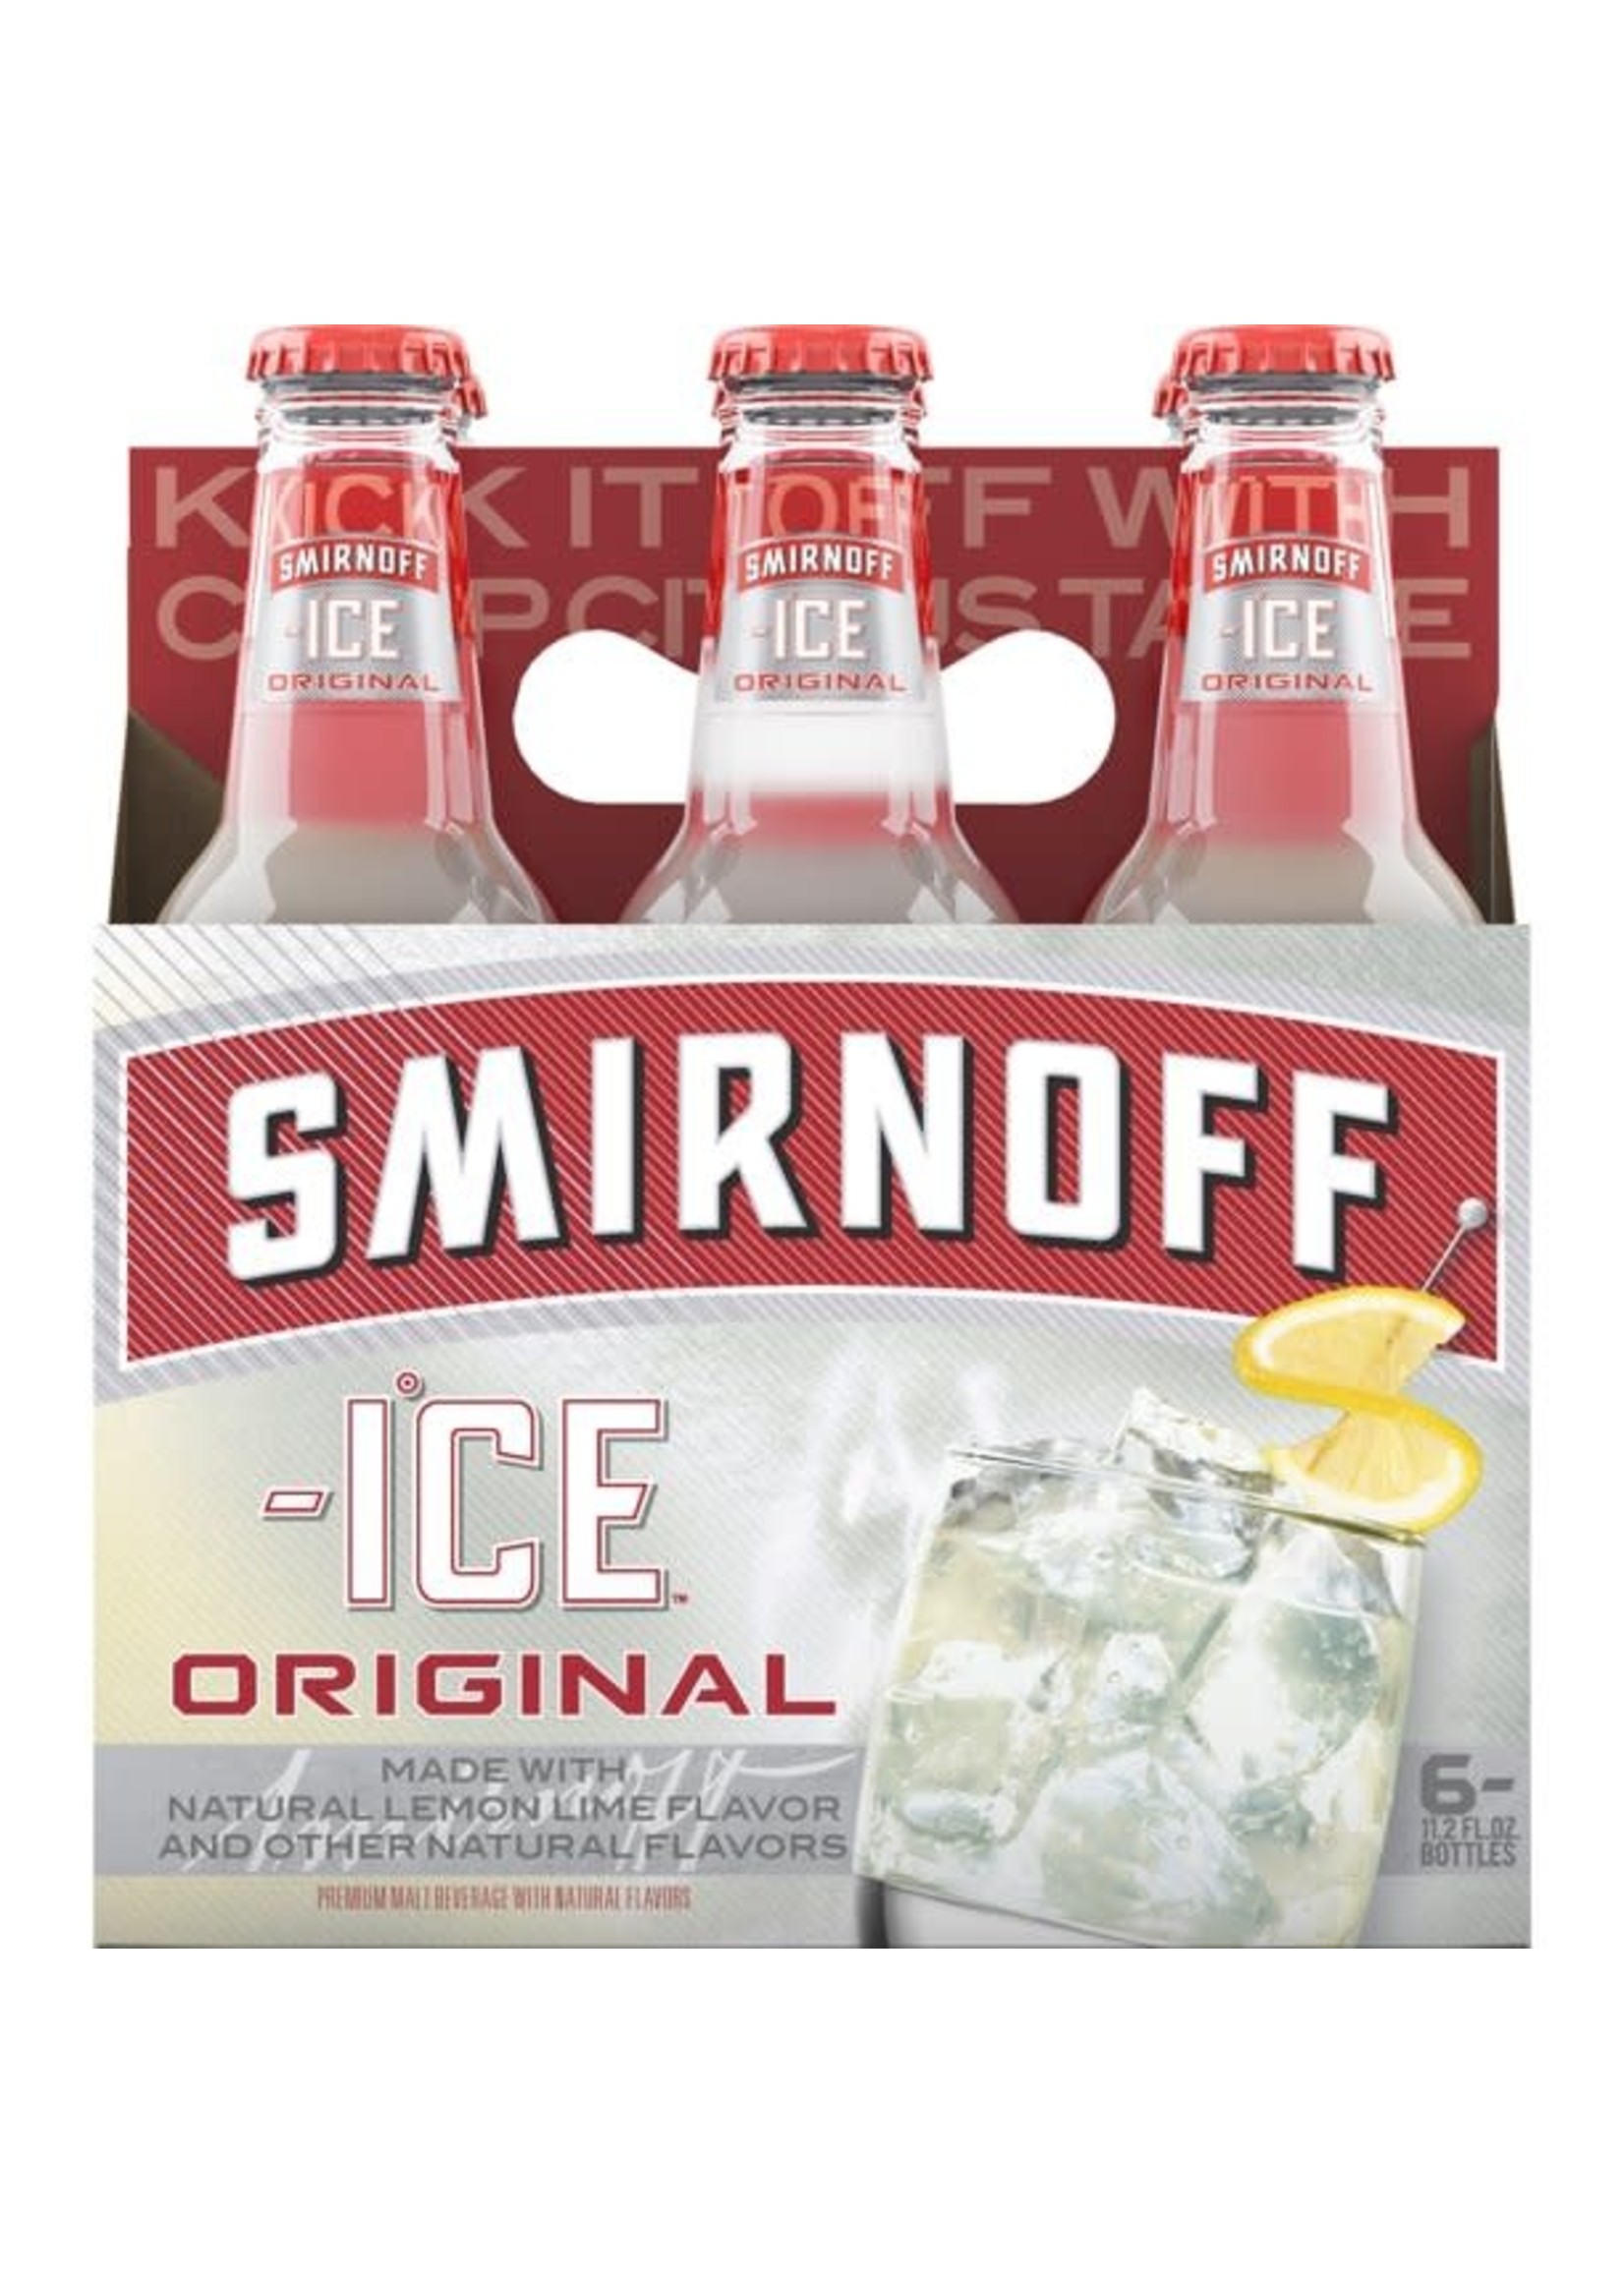 Smirnoff Ice Original 6pk 11.2oz Bottles